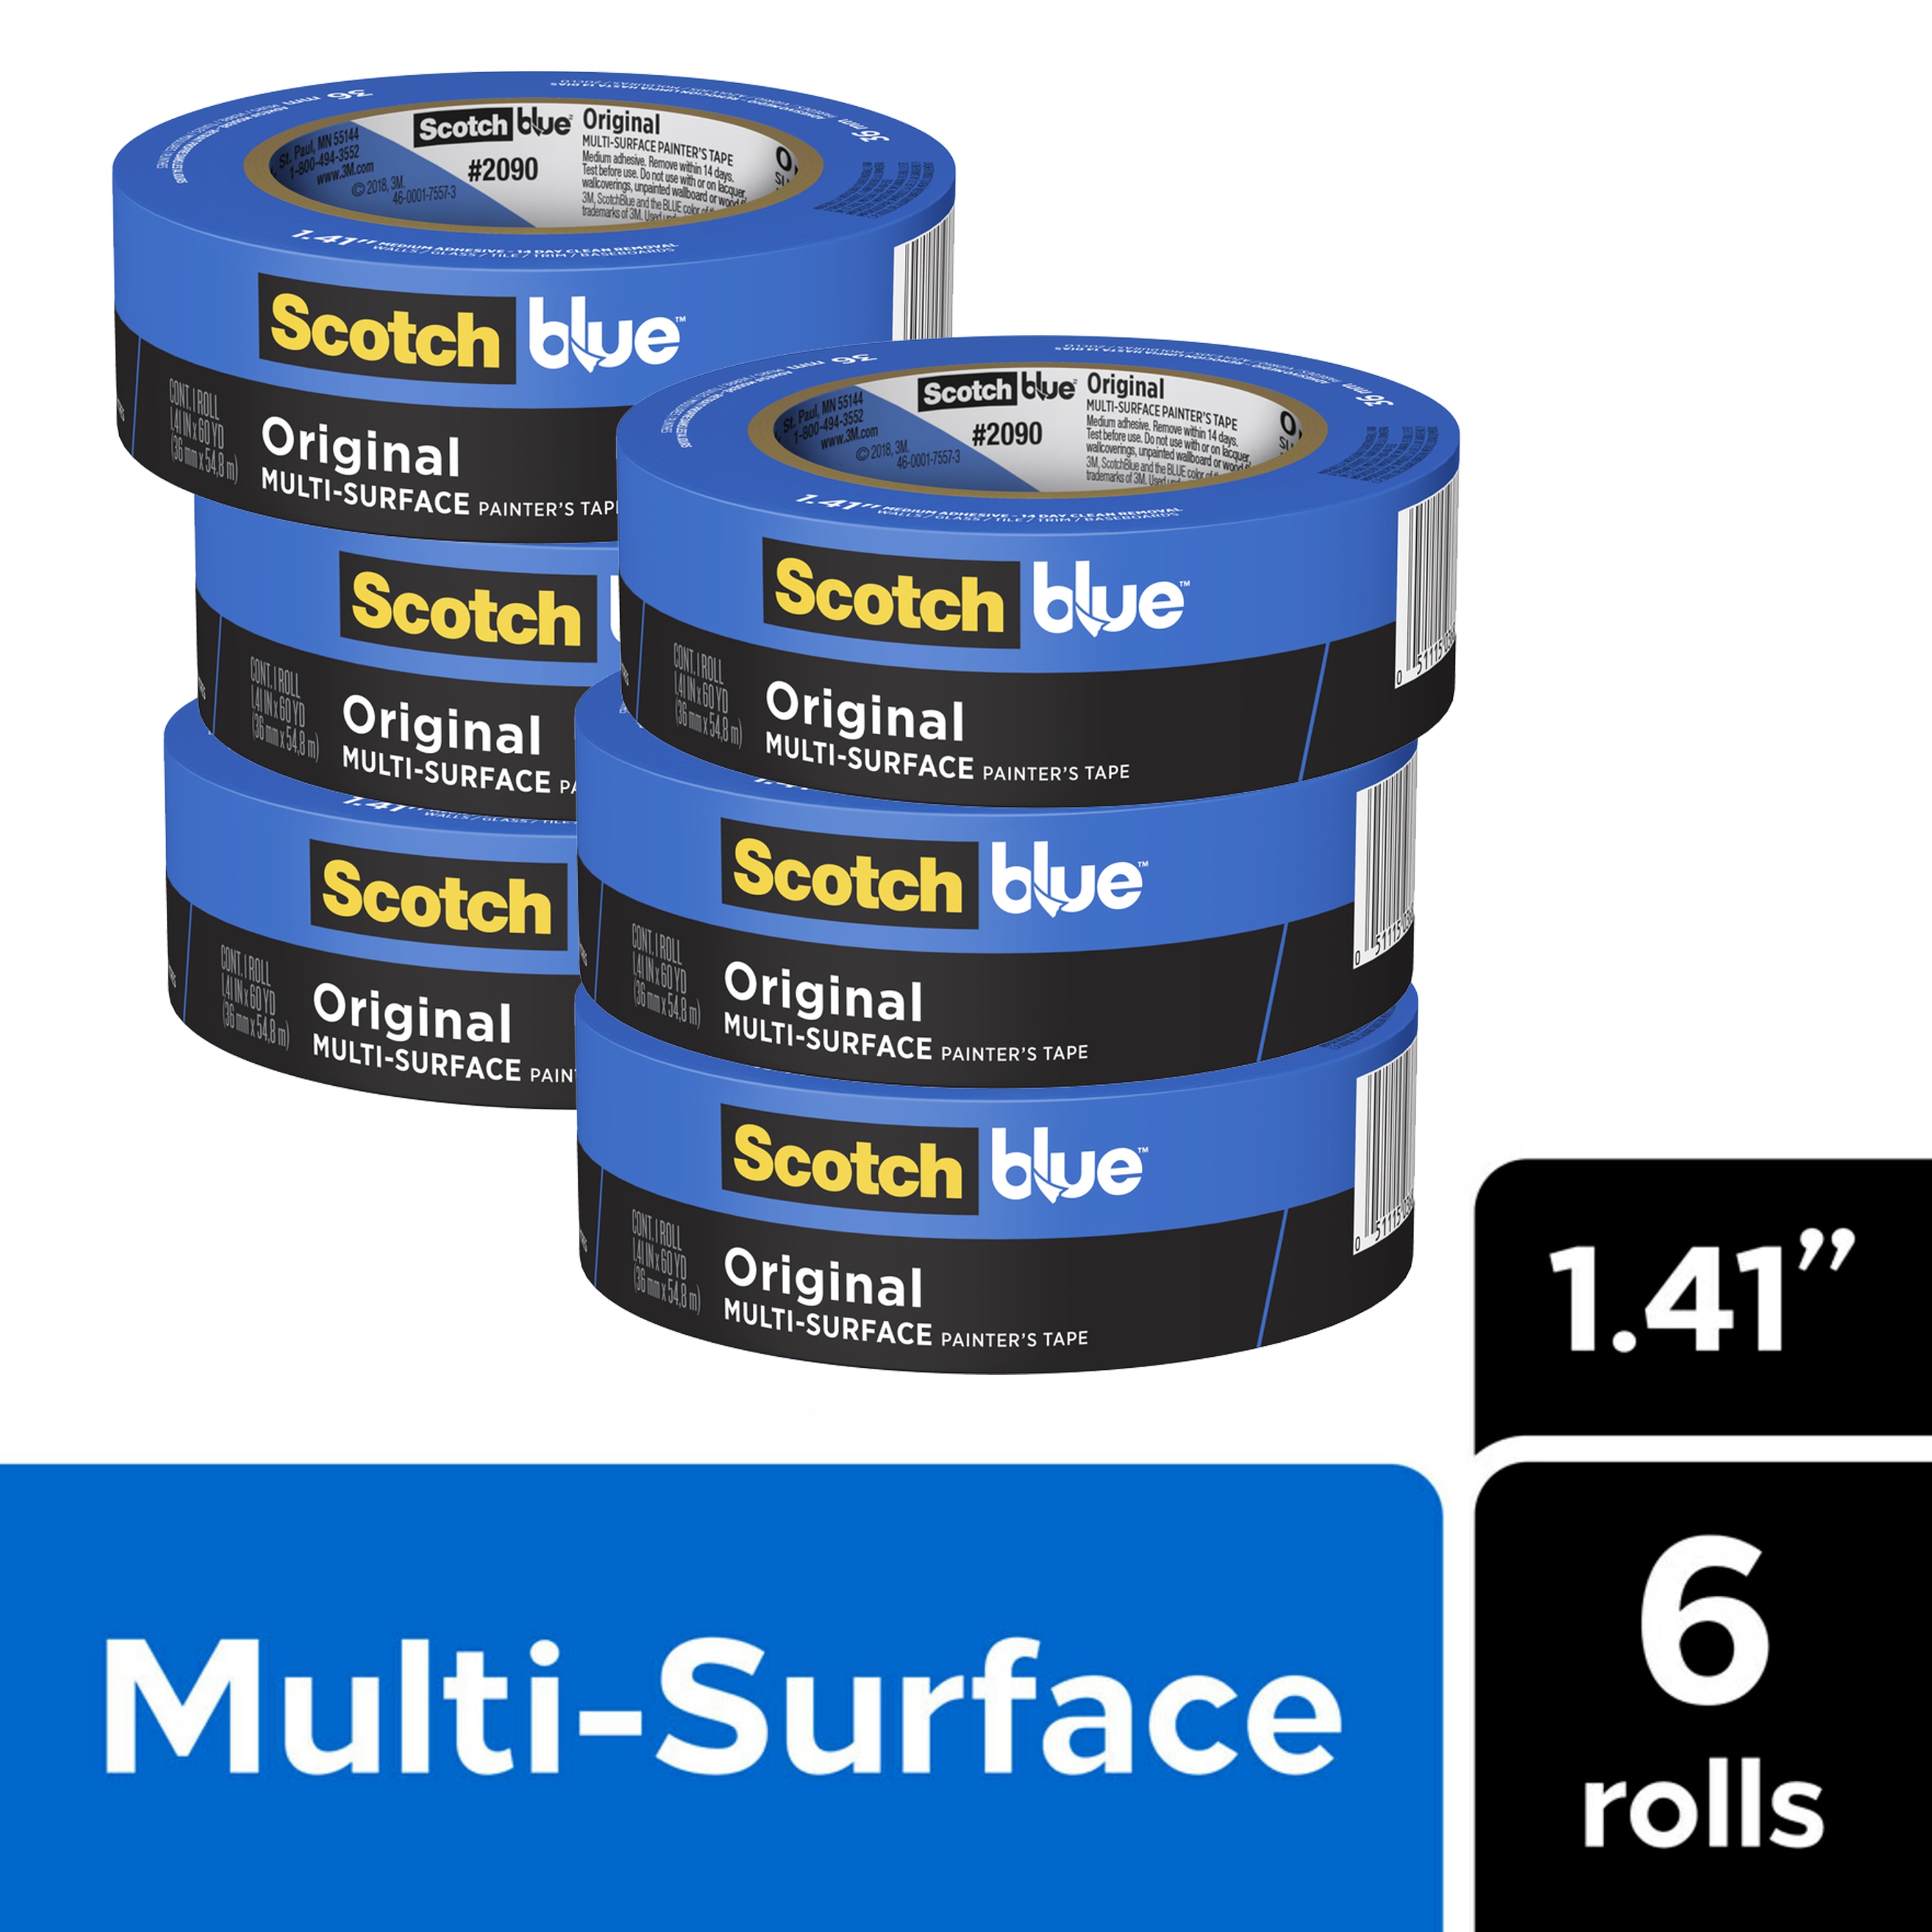 Scotchblue Original Multi-Surface Painter's Tape - MMM209048EVP